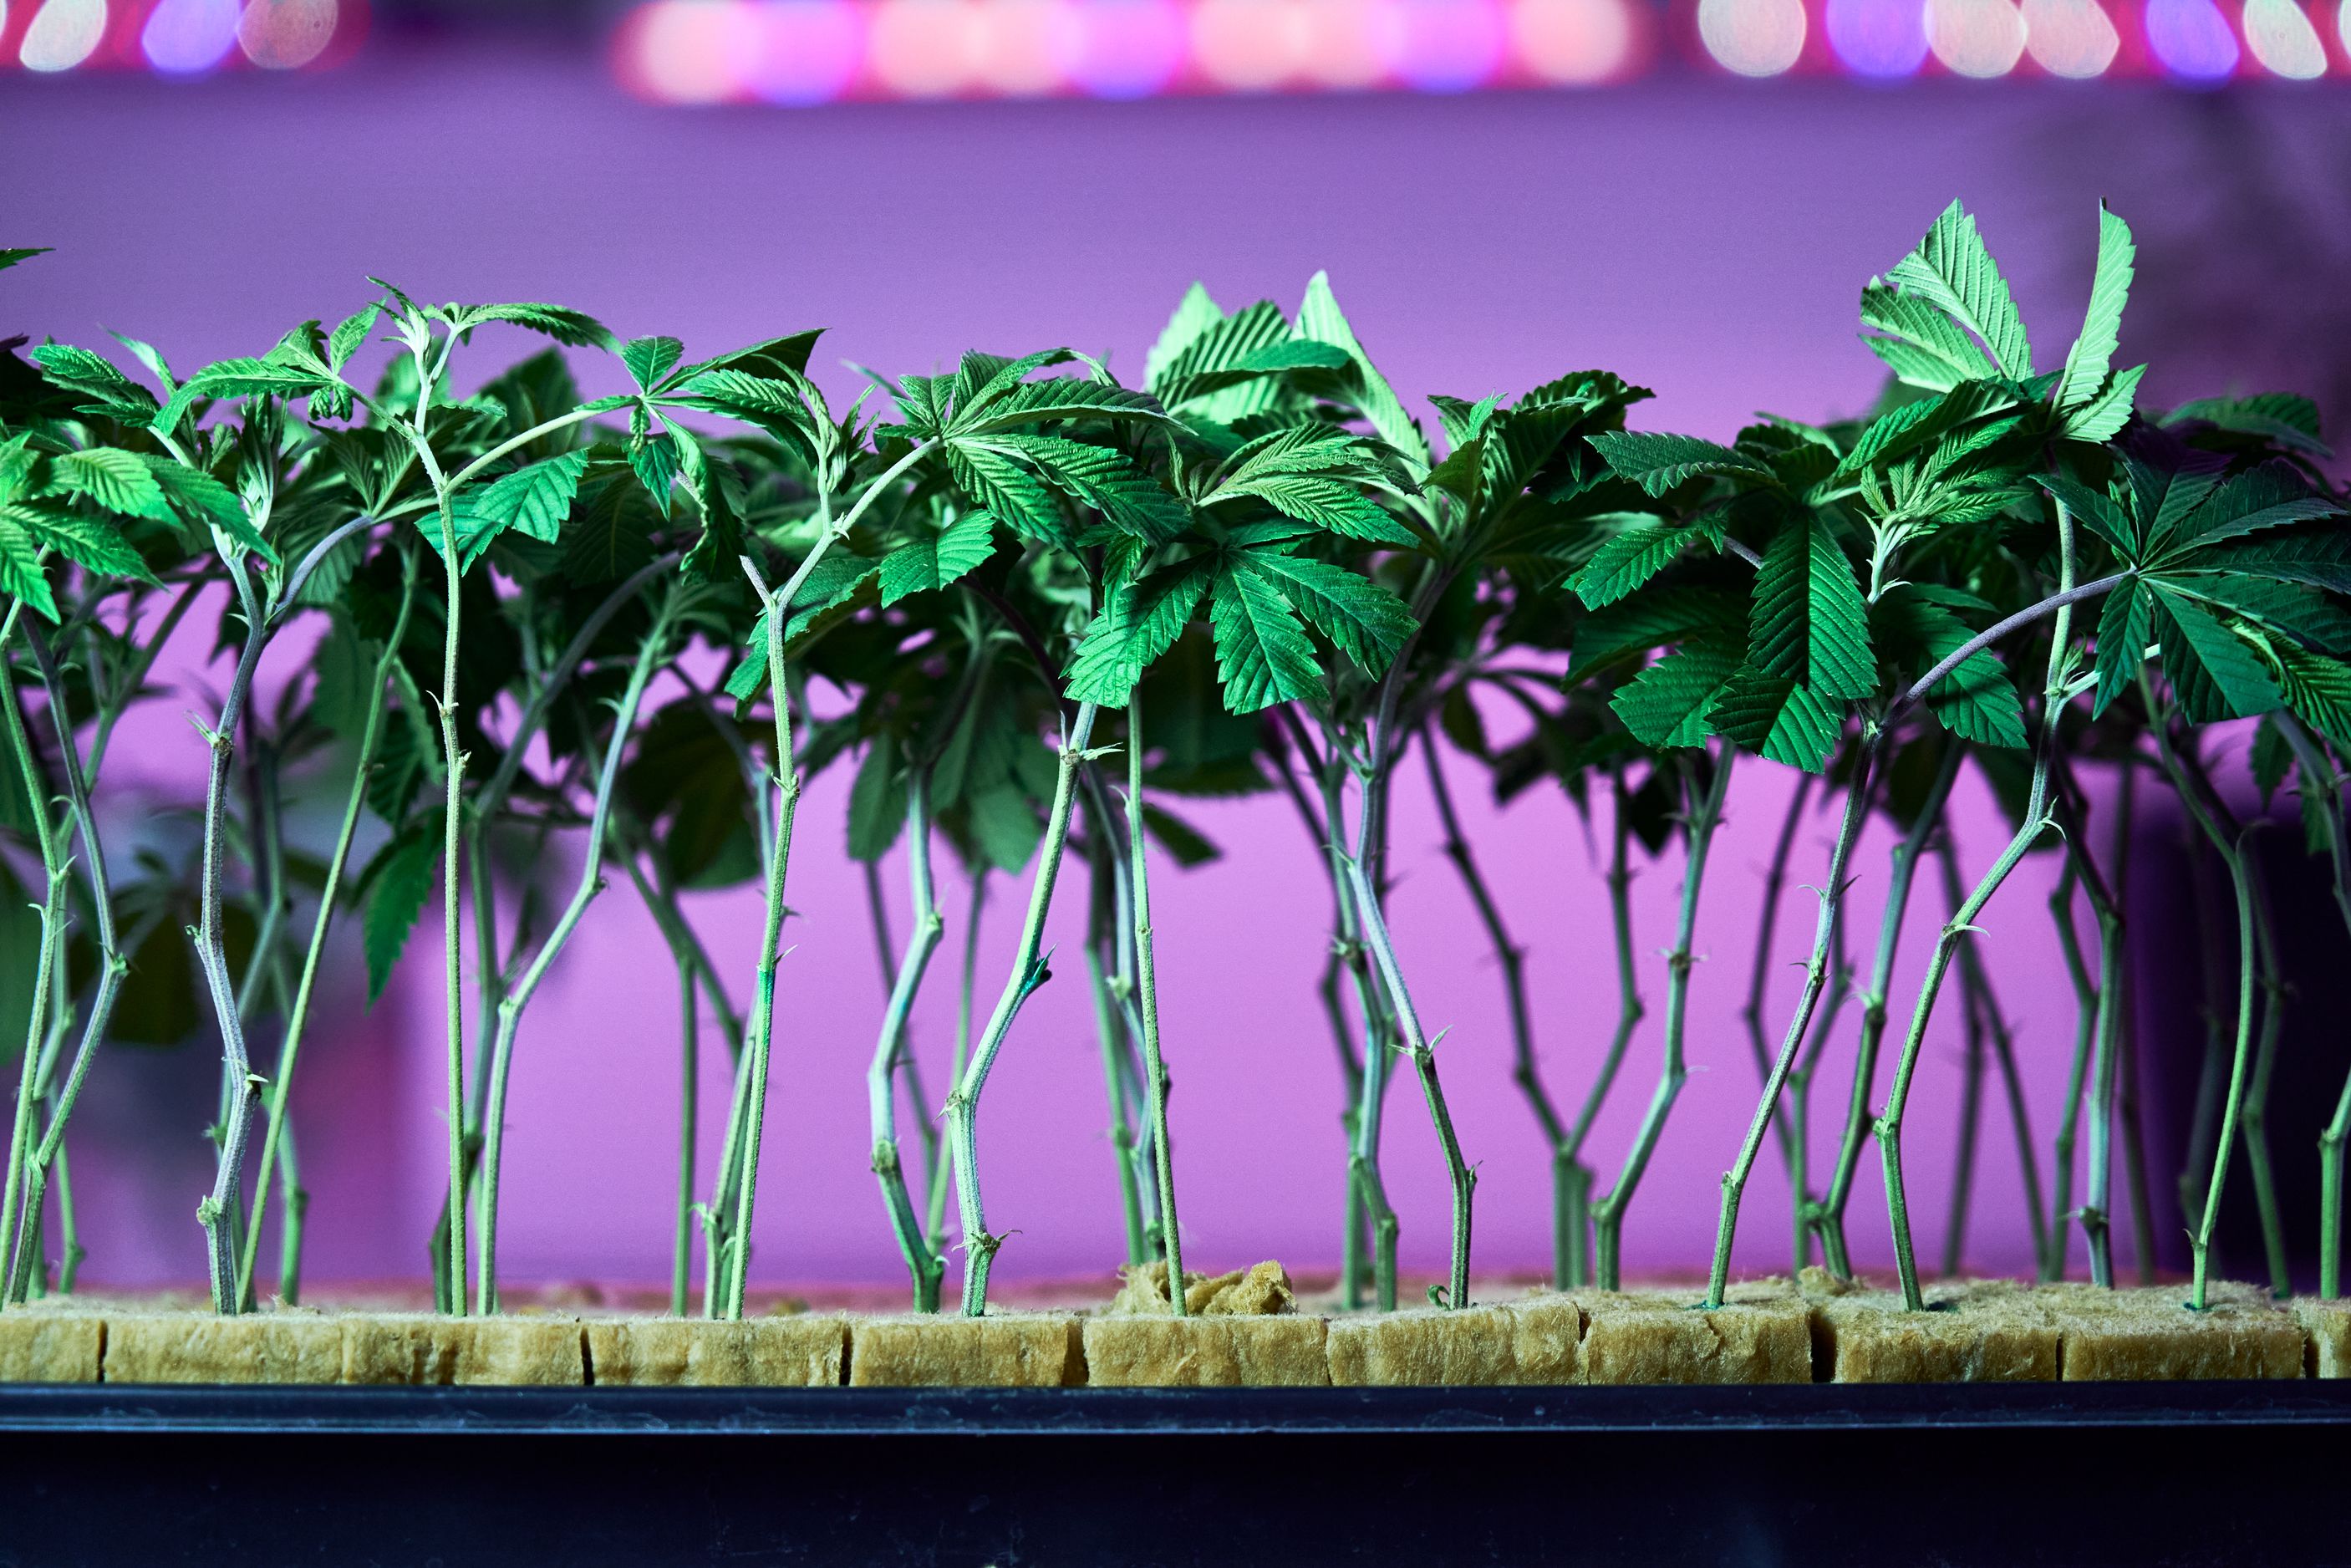 Close up of cloned cannabis plants growing under purple UV lights